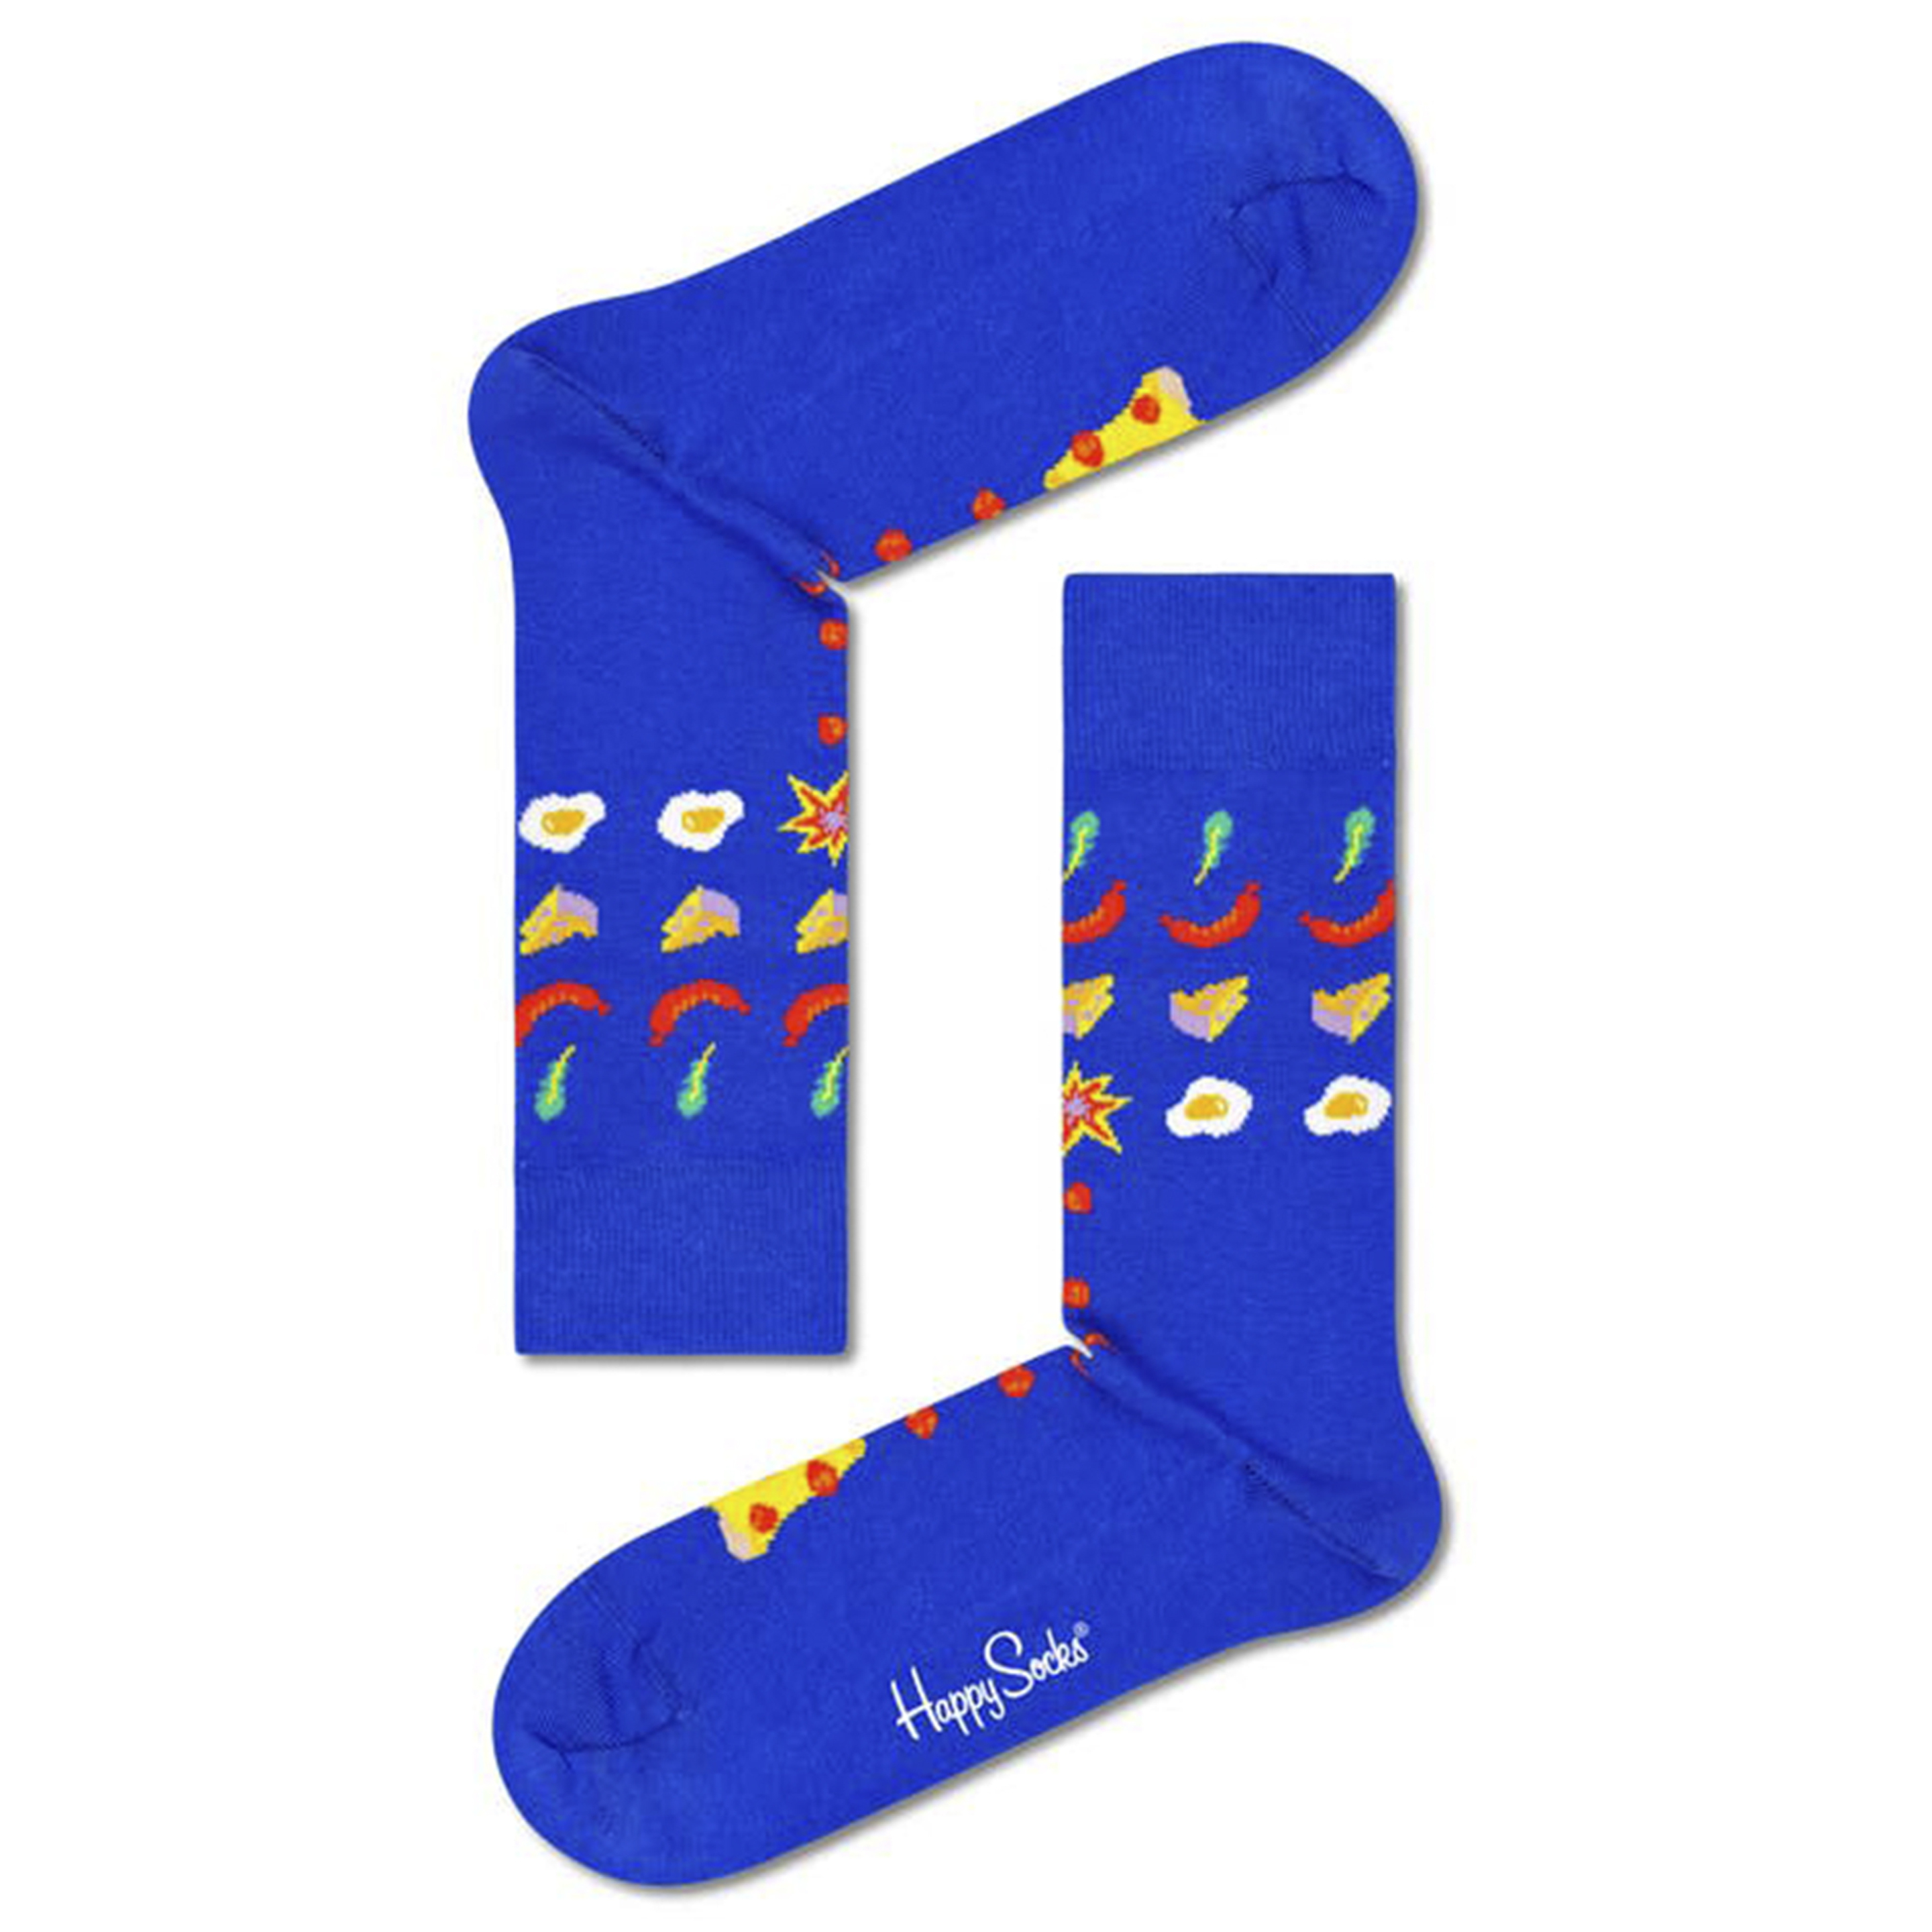 Meias Happy Socks Pizza Invaders - multicolor - 